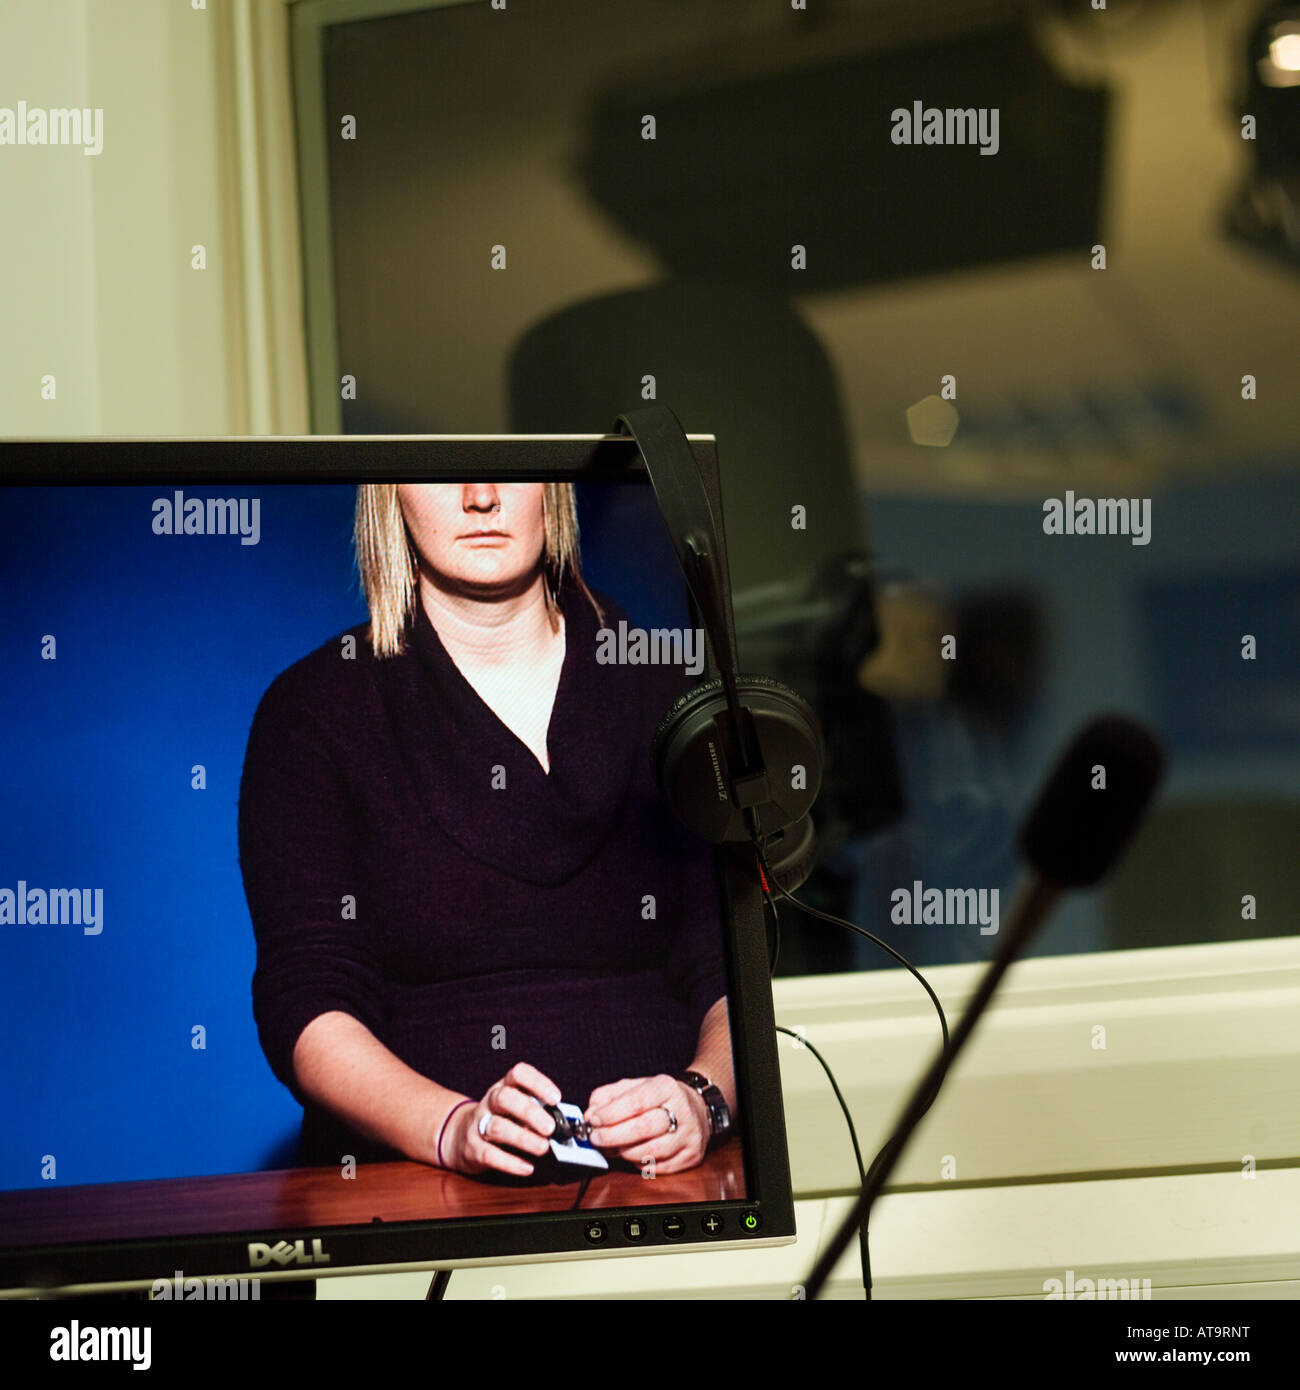 news broadcast recording internet TV monitor studio filming on air Stock Photo